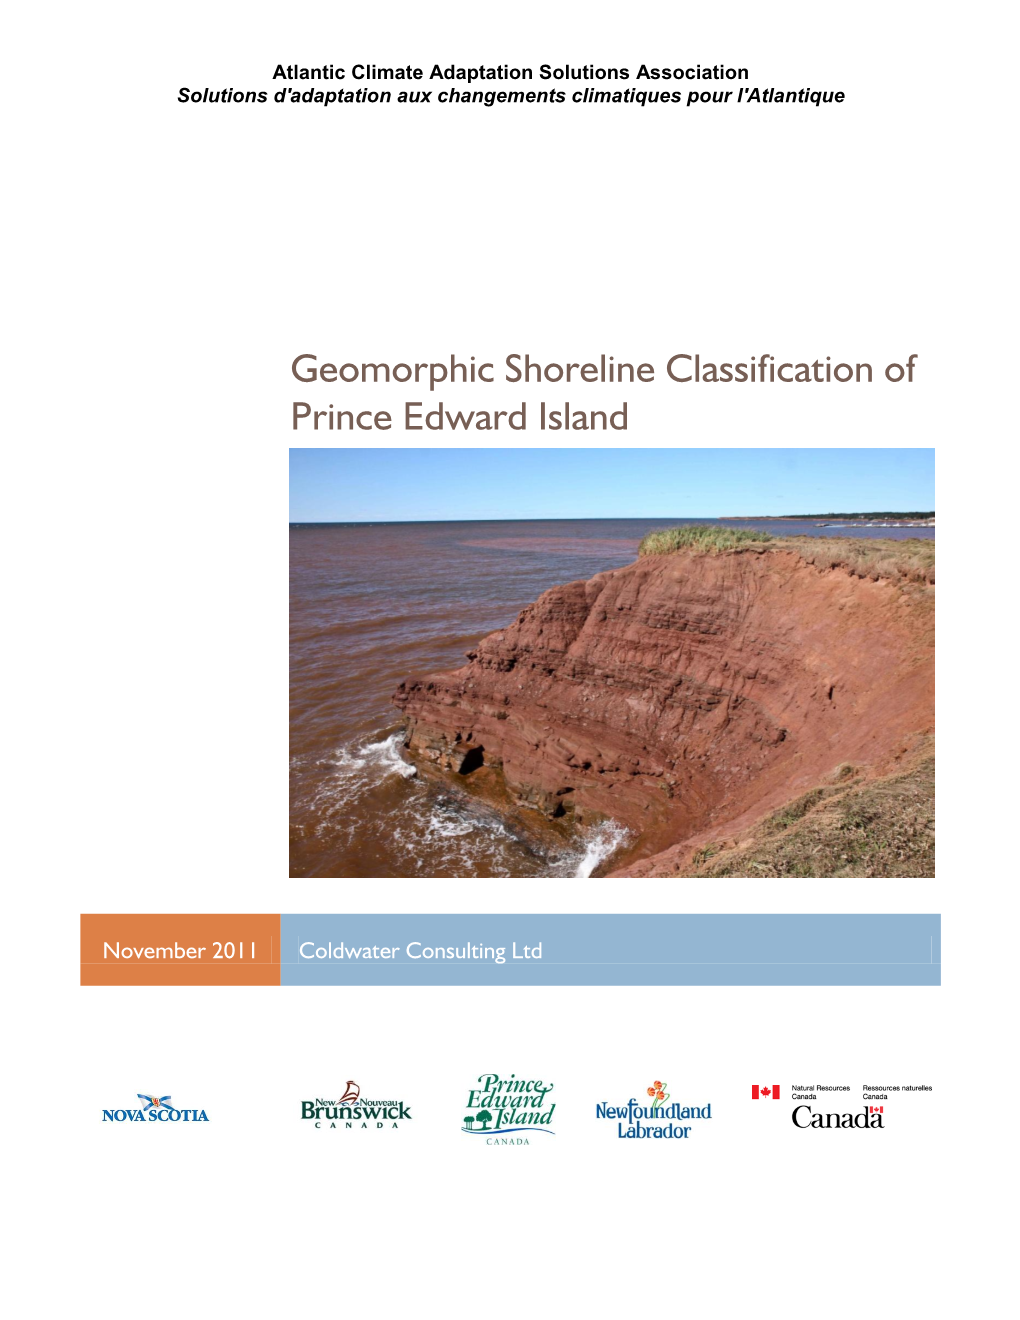 Geomorphic Shoreline Classification of Prince Edward Island